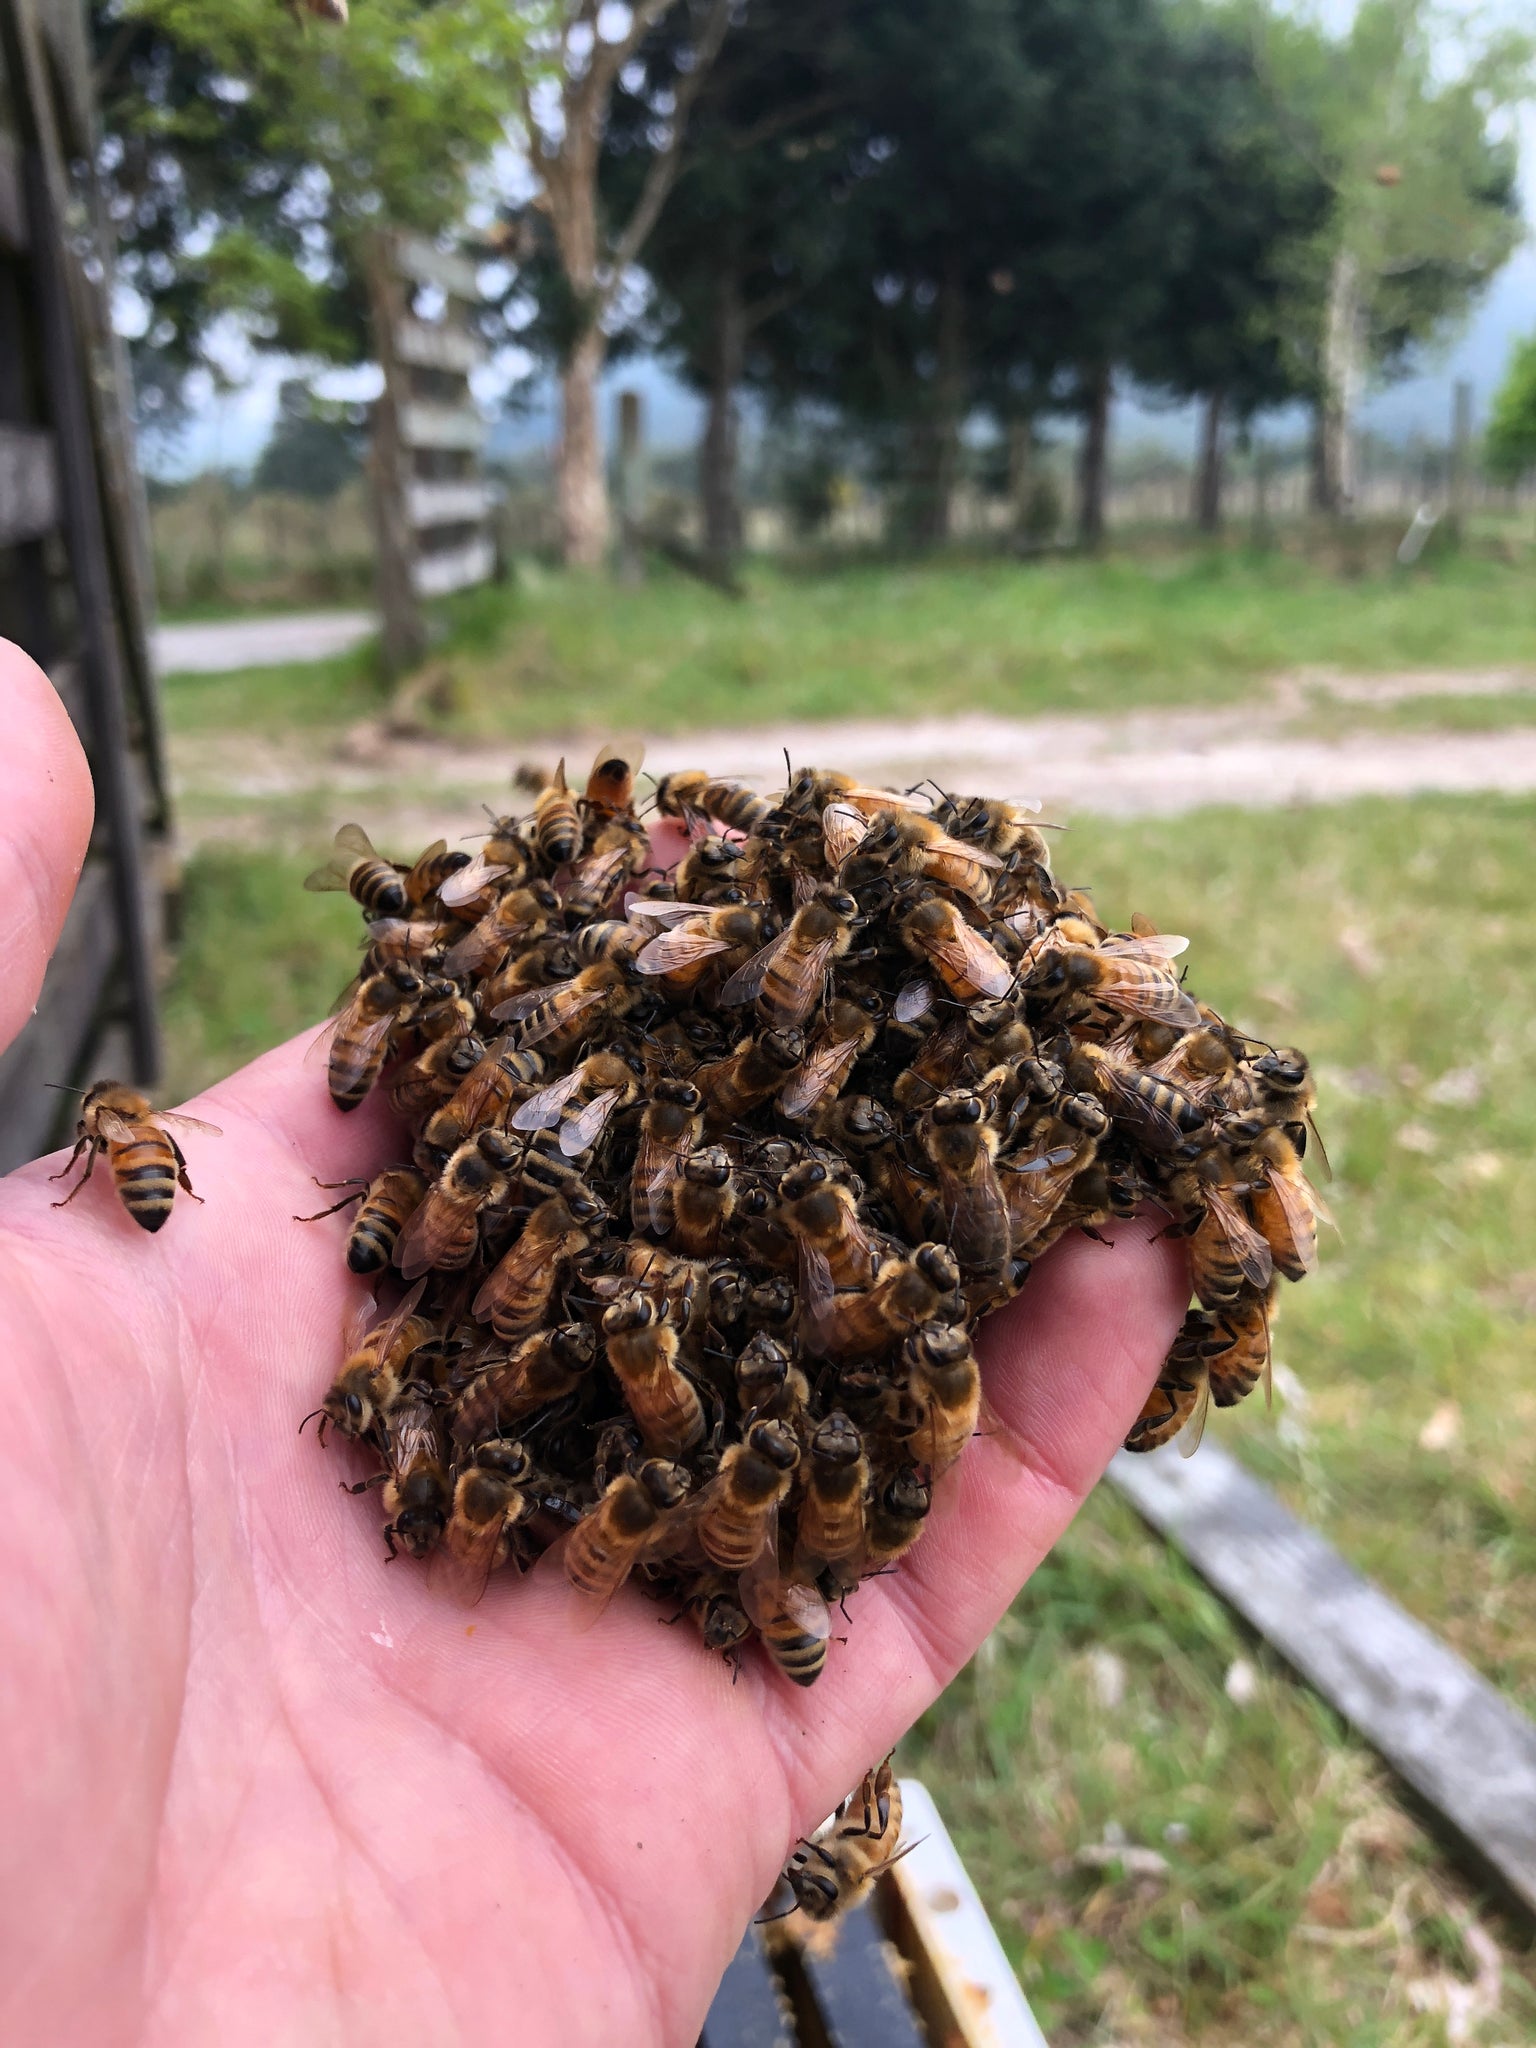 Handling a Beeswarm